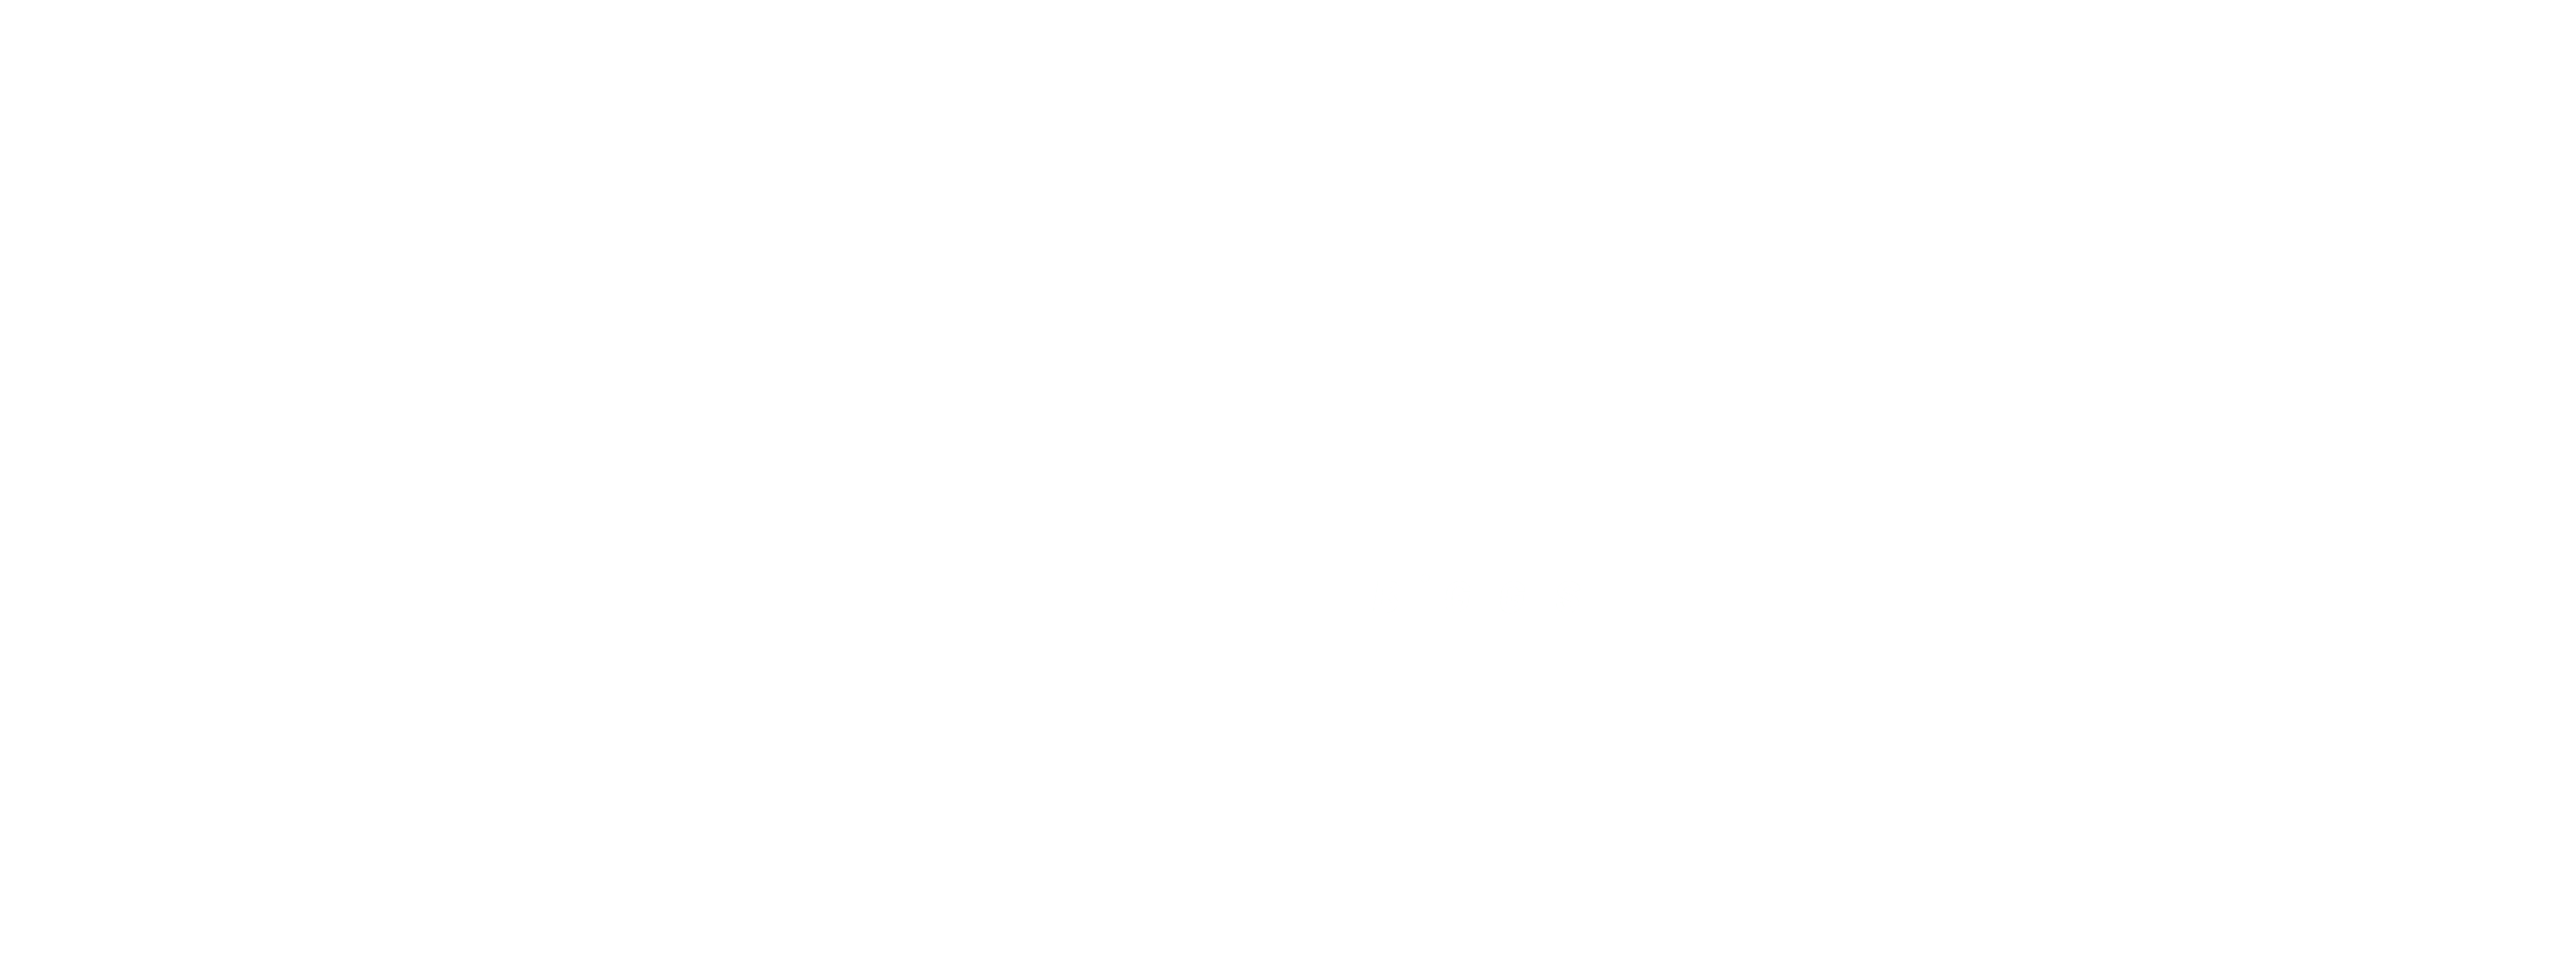 AMC Networks International